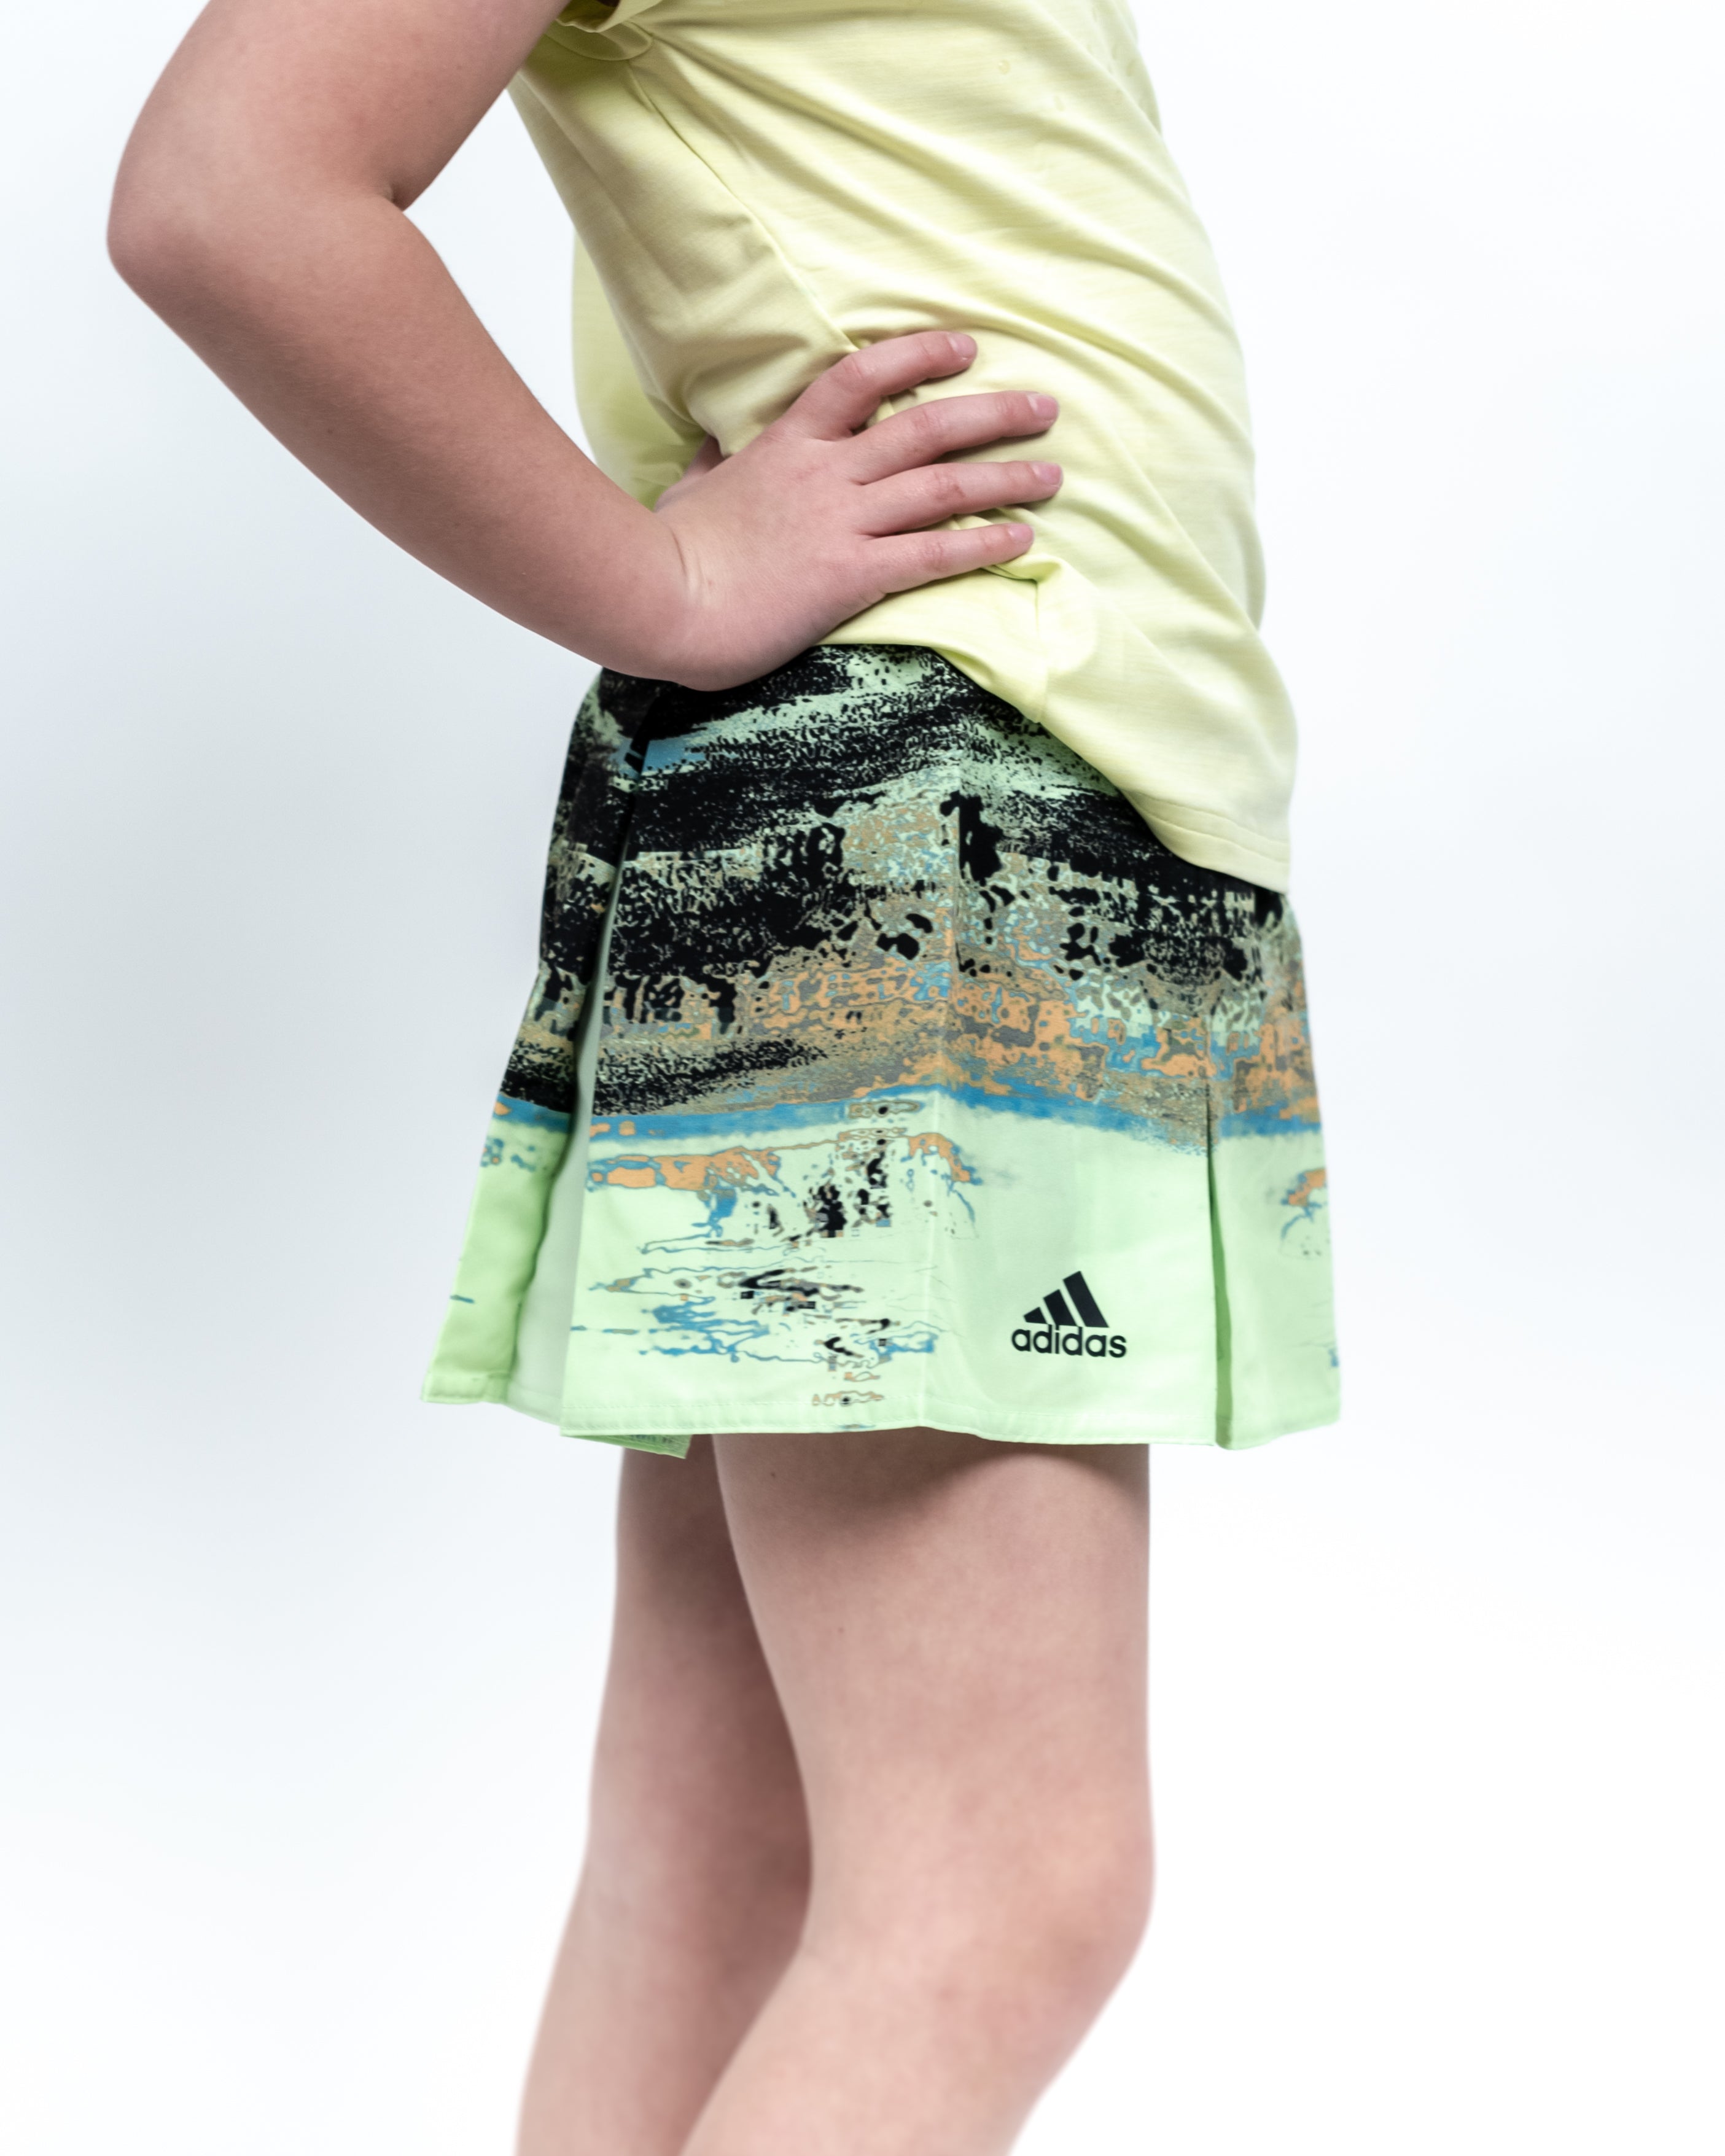 Adidas Pige Skirt